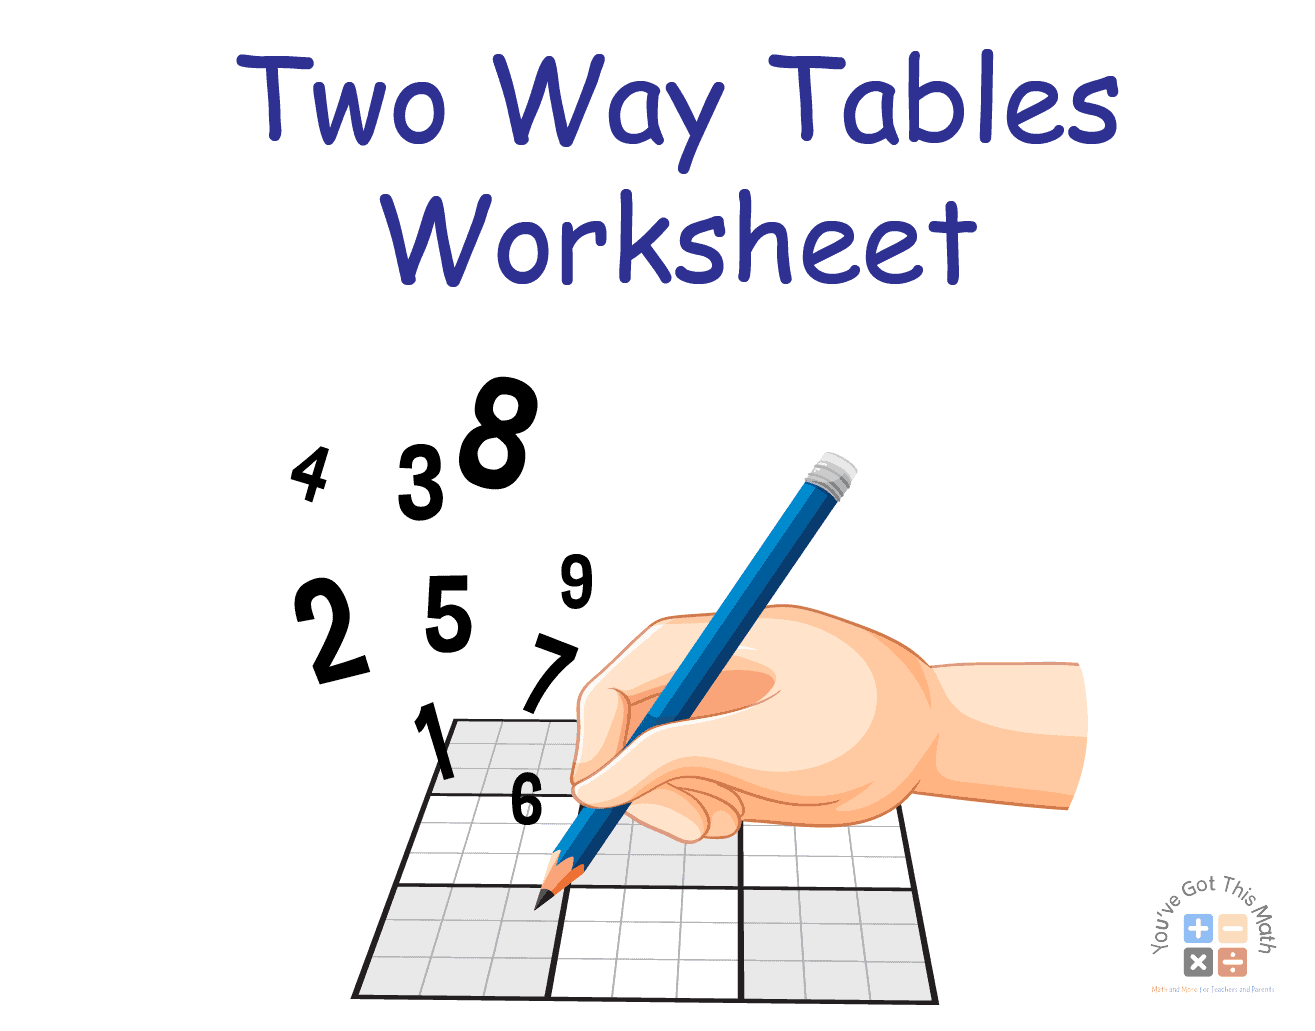 5 Two Way Tables Worksheet | Free Printables